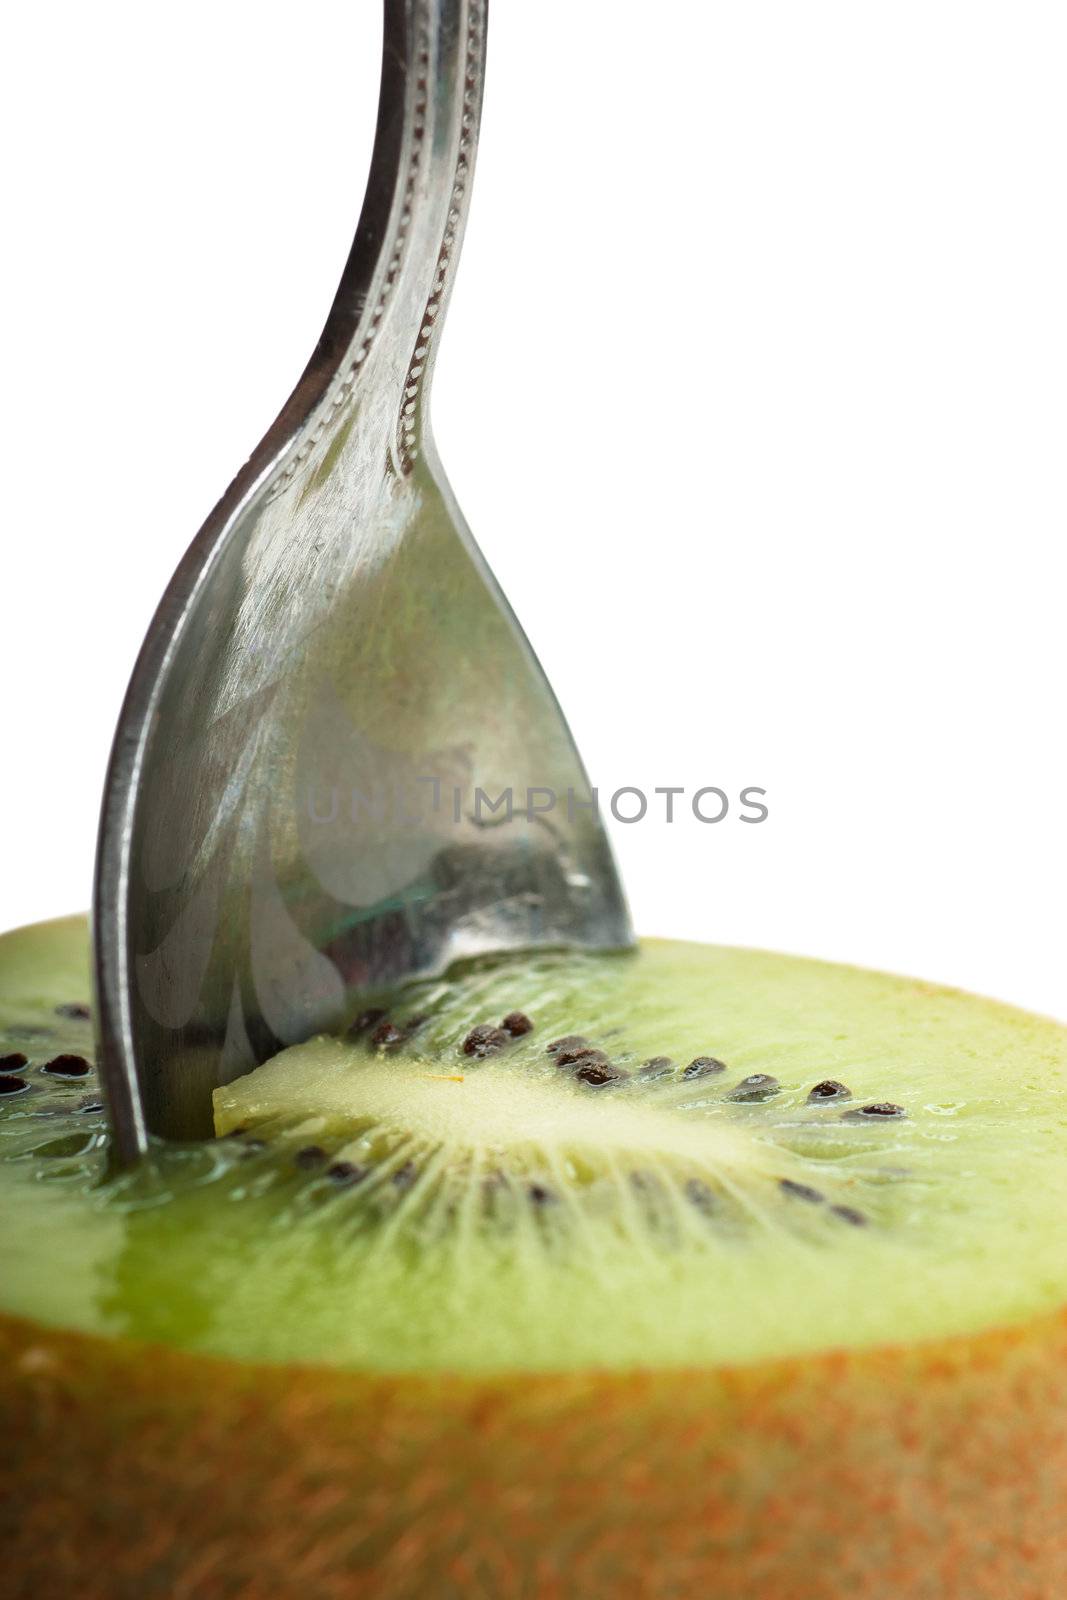 Closeup view of teaspoon in a kiwi fruit